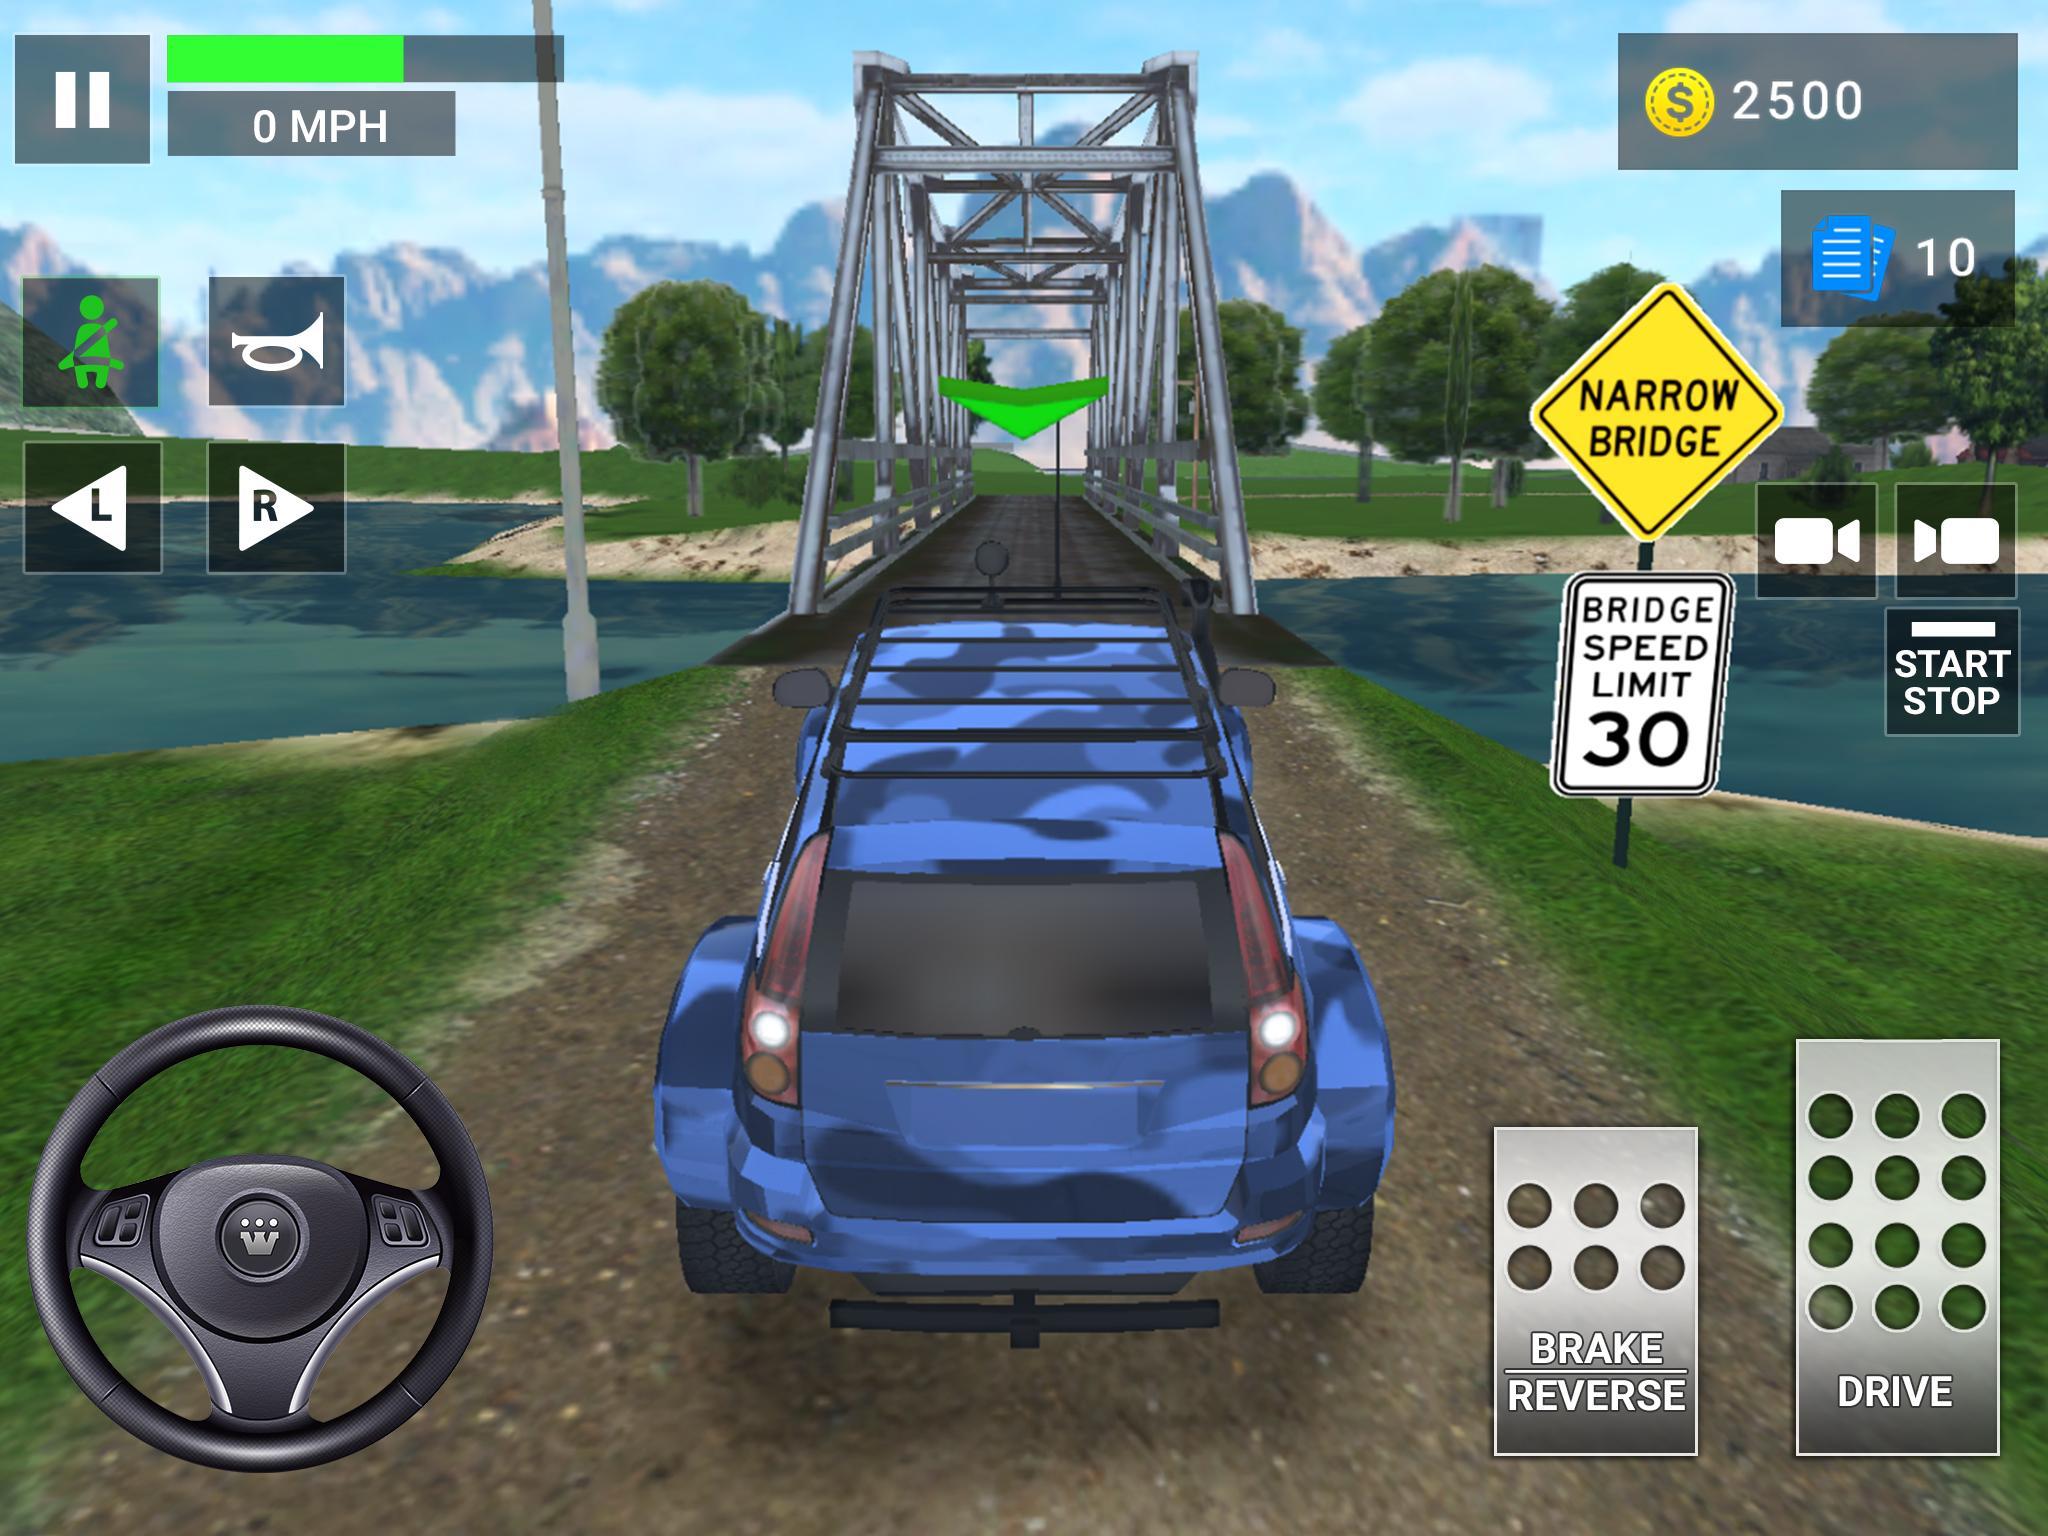 Driving Academy 2 Car Games & Driving School 2021 2.1 Screenshot 22